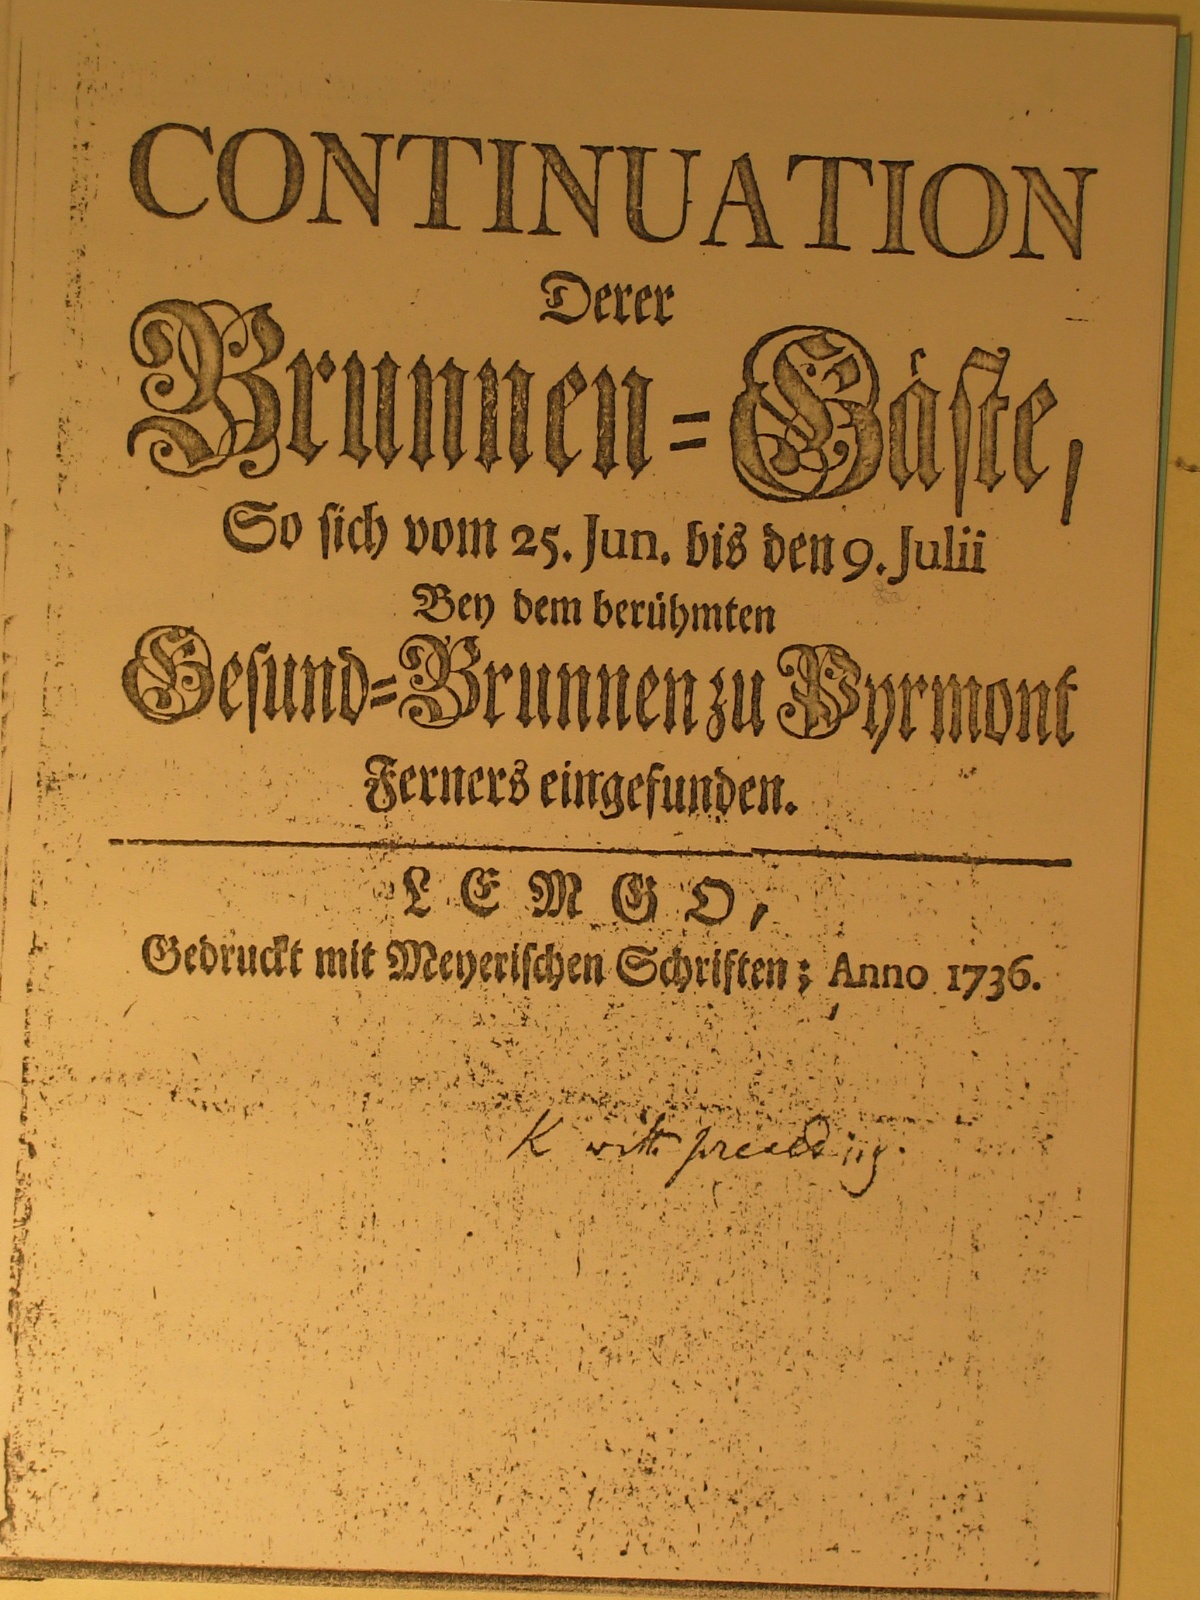 Continuation der Brunnen-Gäste 1736 (Museum im Schloss Bad Pyrmont CC BY-NC-SA)